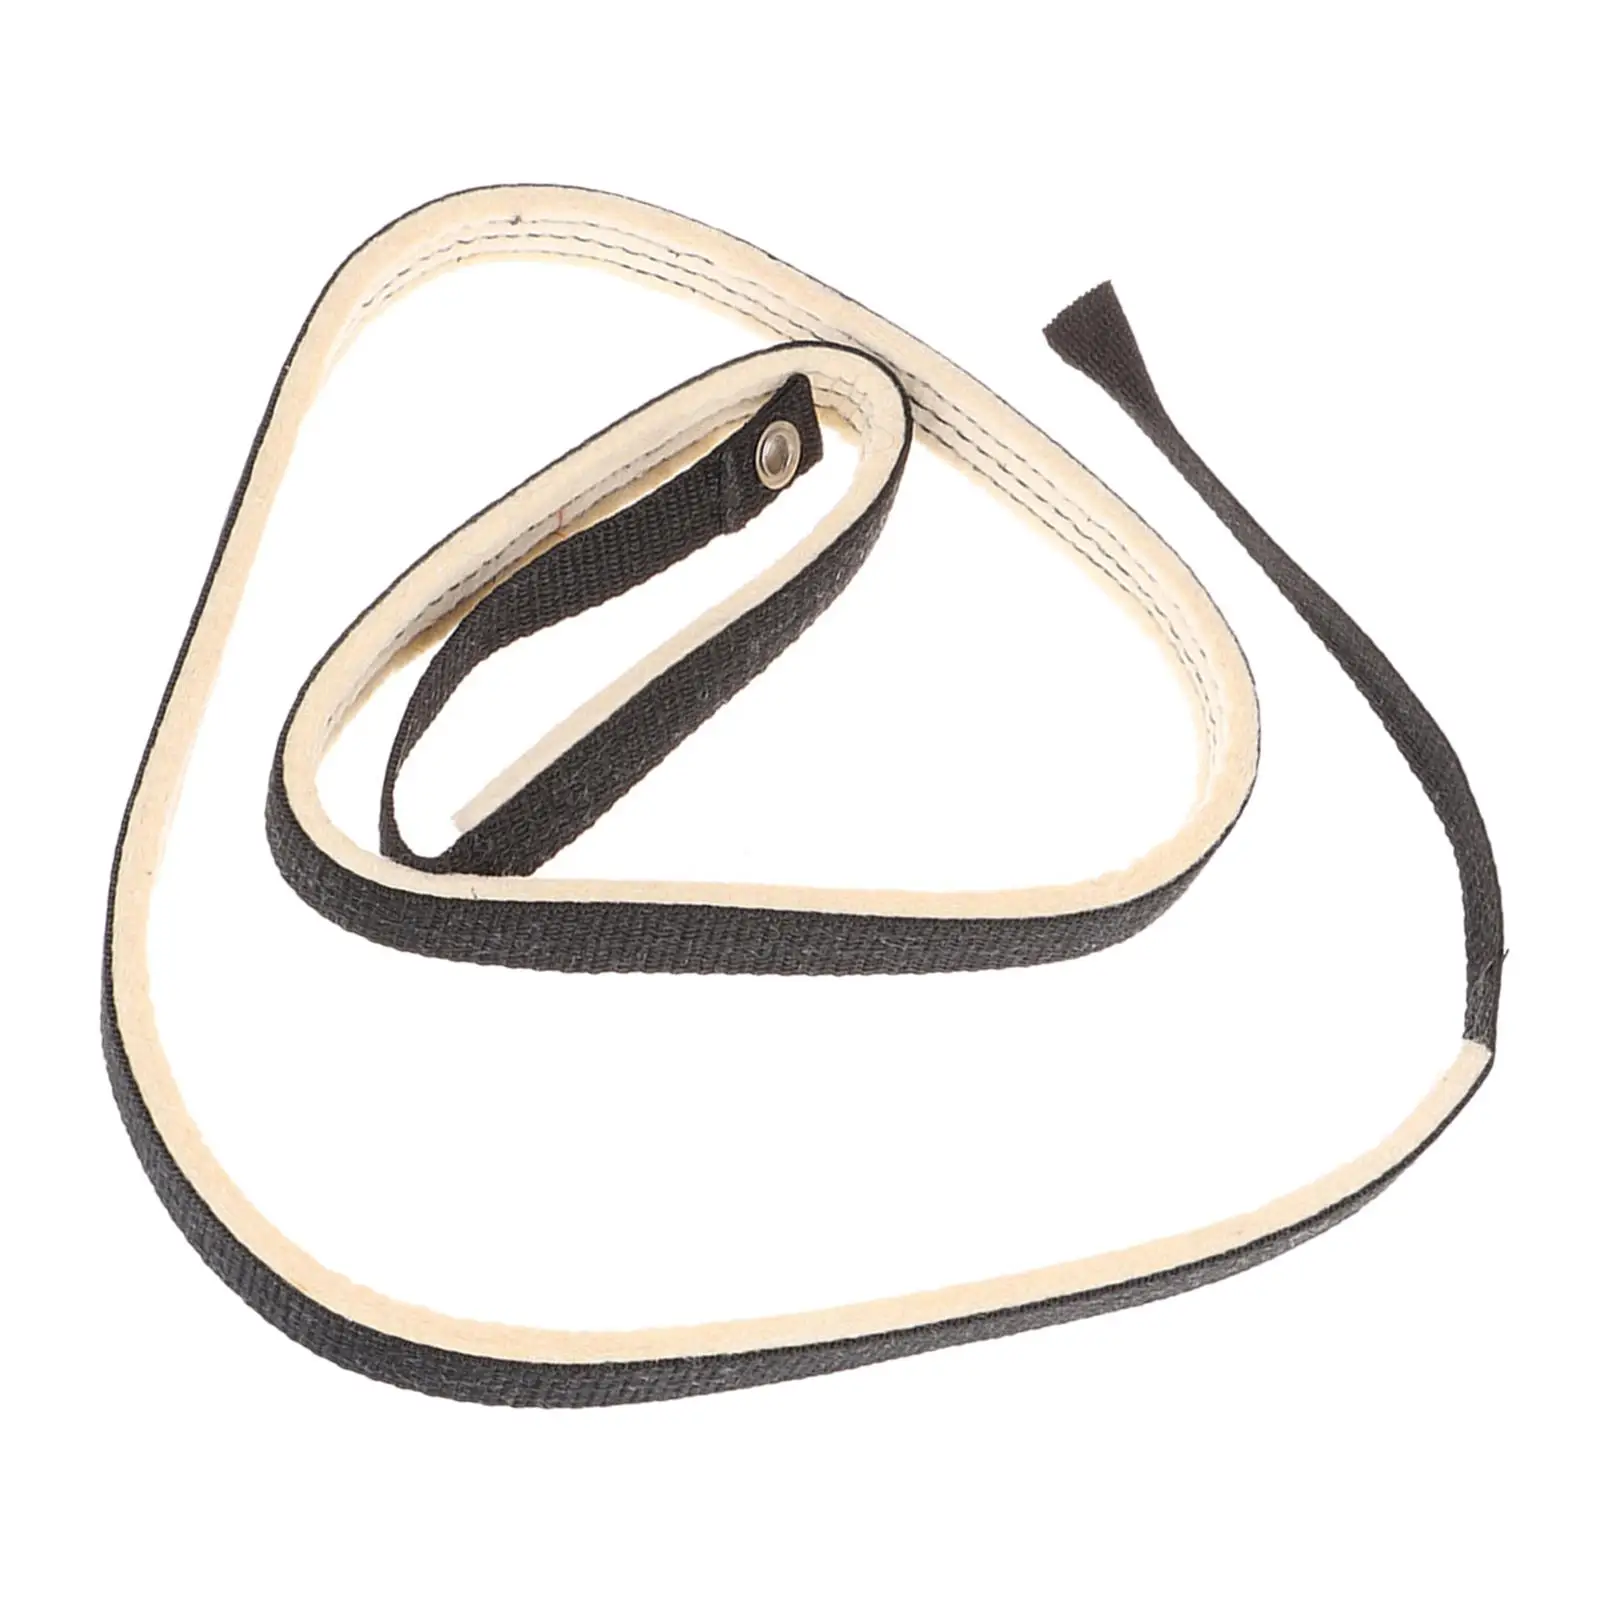 Fitness Bike Power Resistance Belt Wool Brake Band Belt Repair Accessory Friction Band Resistance Belt for Exercise Indoor Home